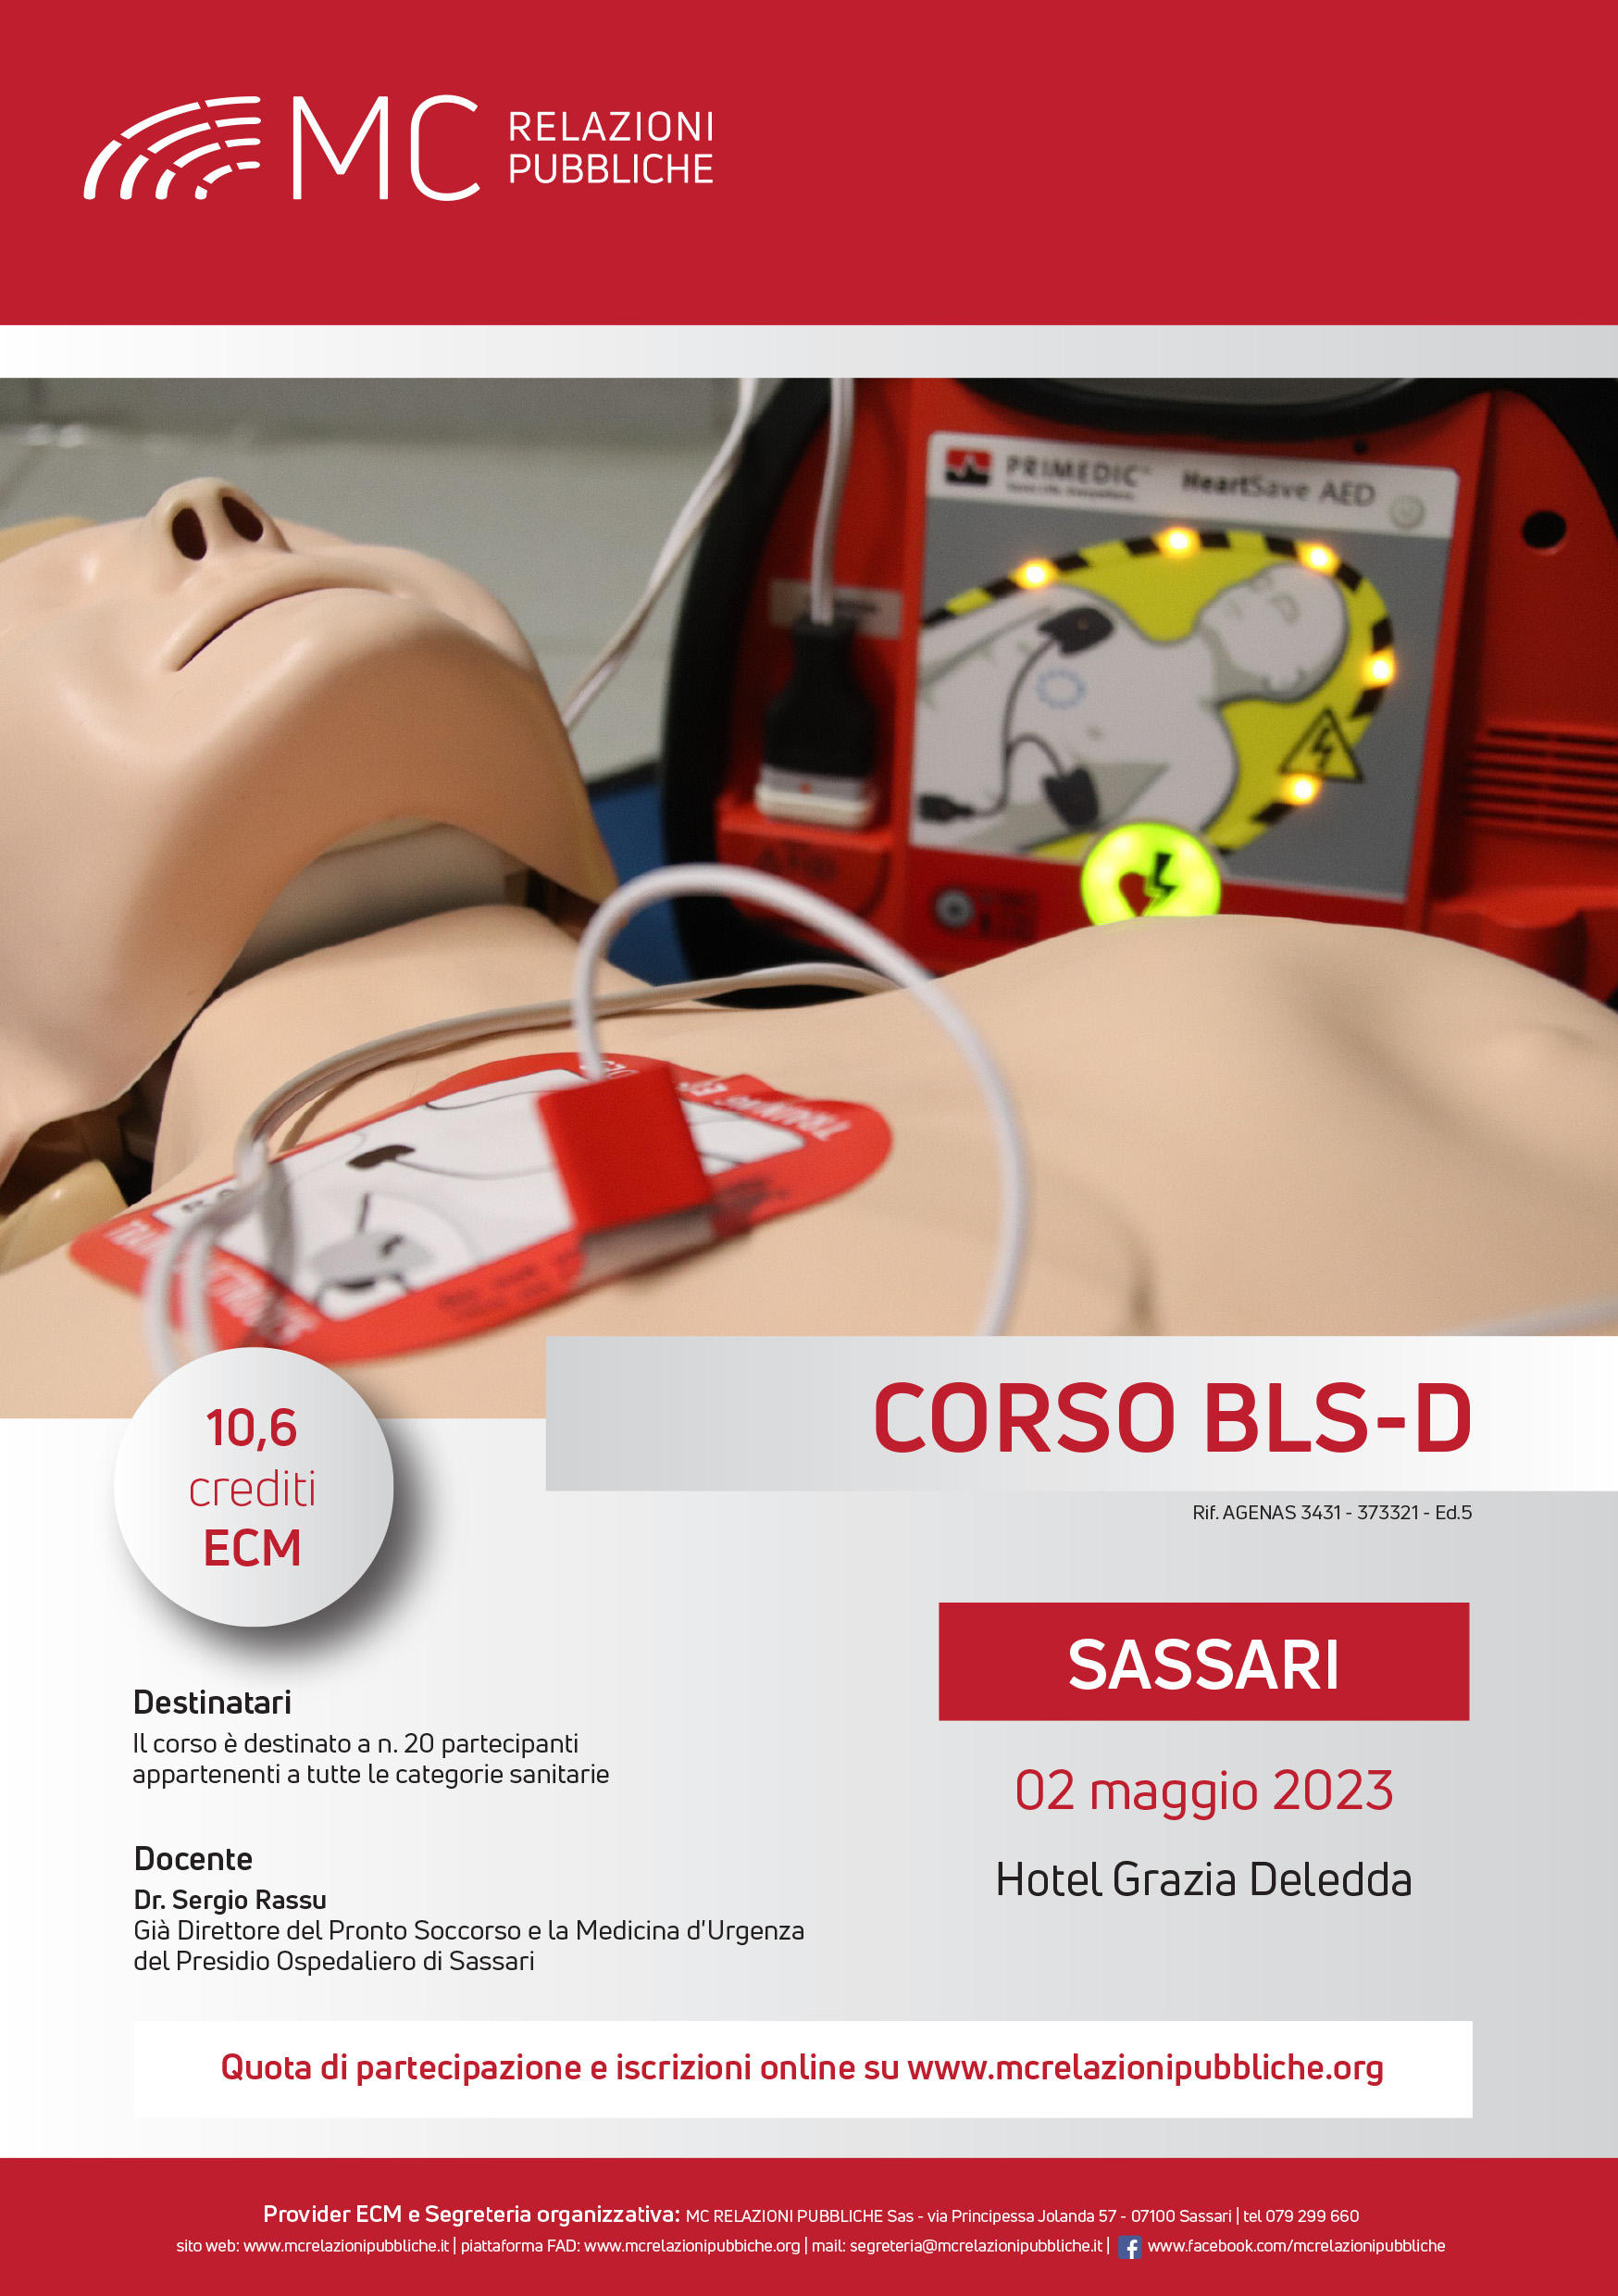 Corso BLS-D. Basic life support-defibrillation ed.5